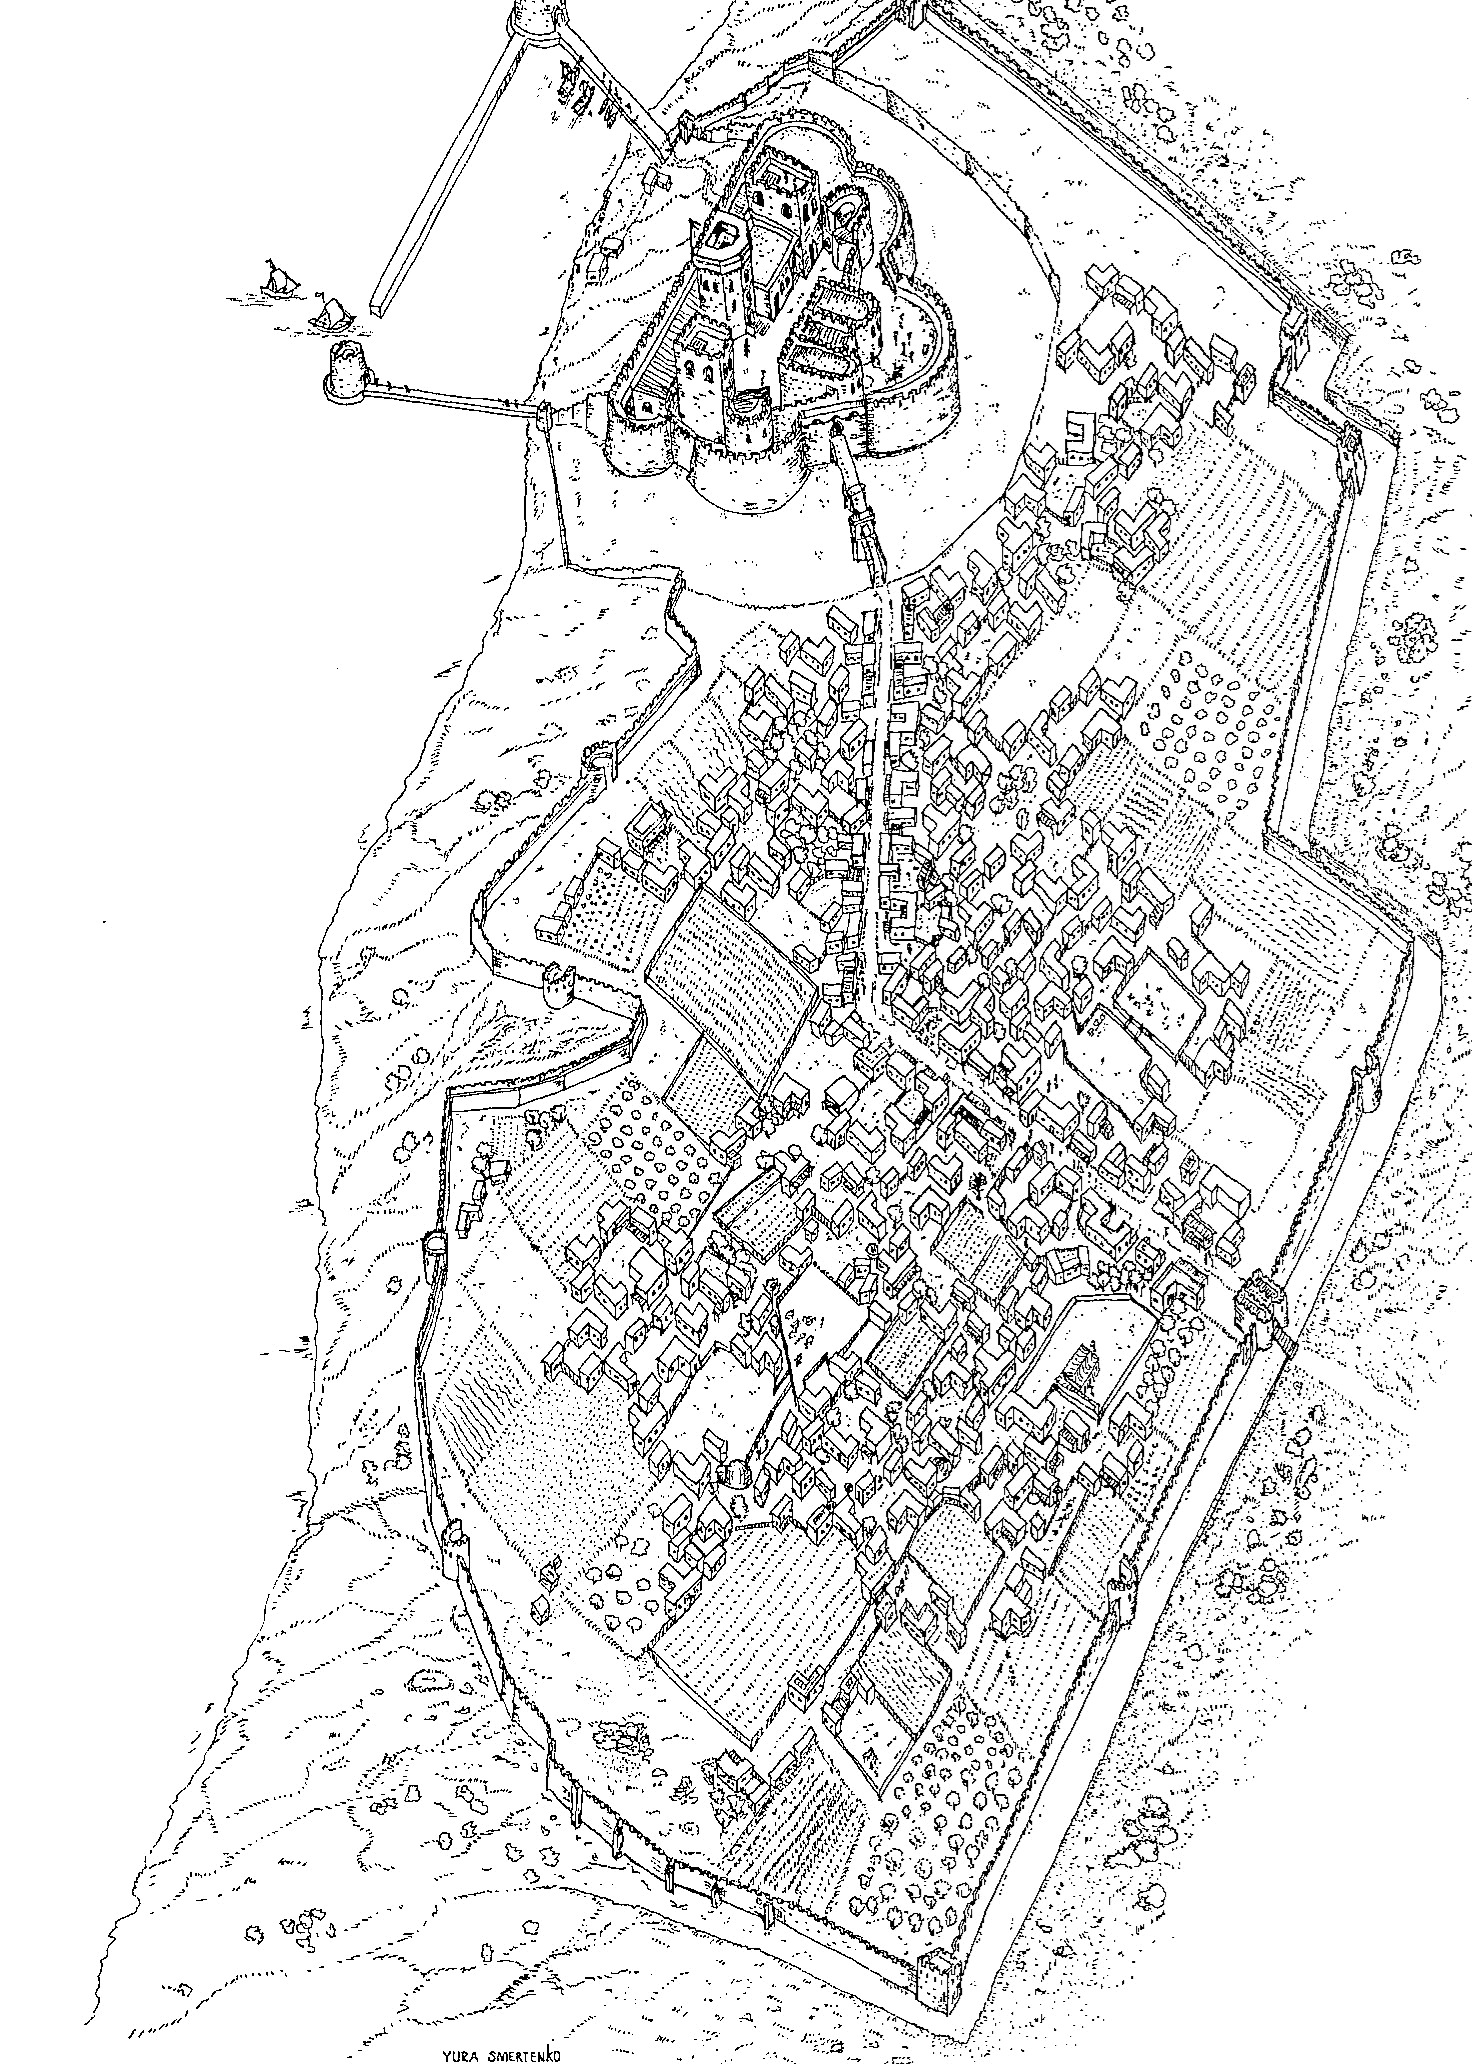 Crusader city: A bird's-eye view of the reconstruction of Crusader City.